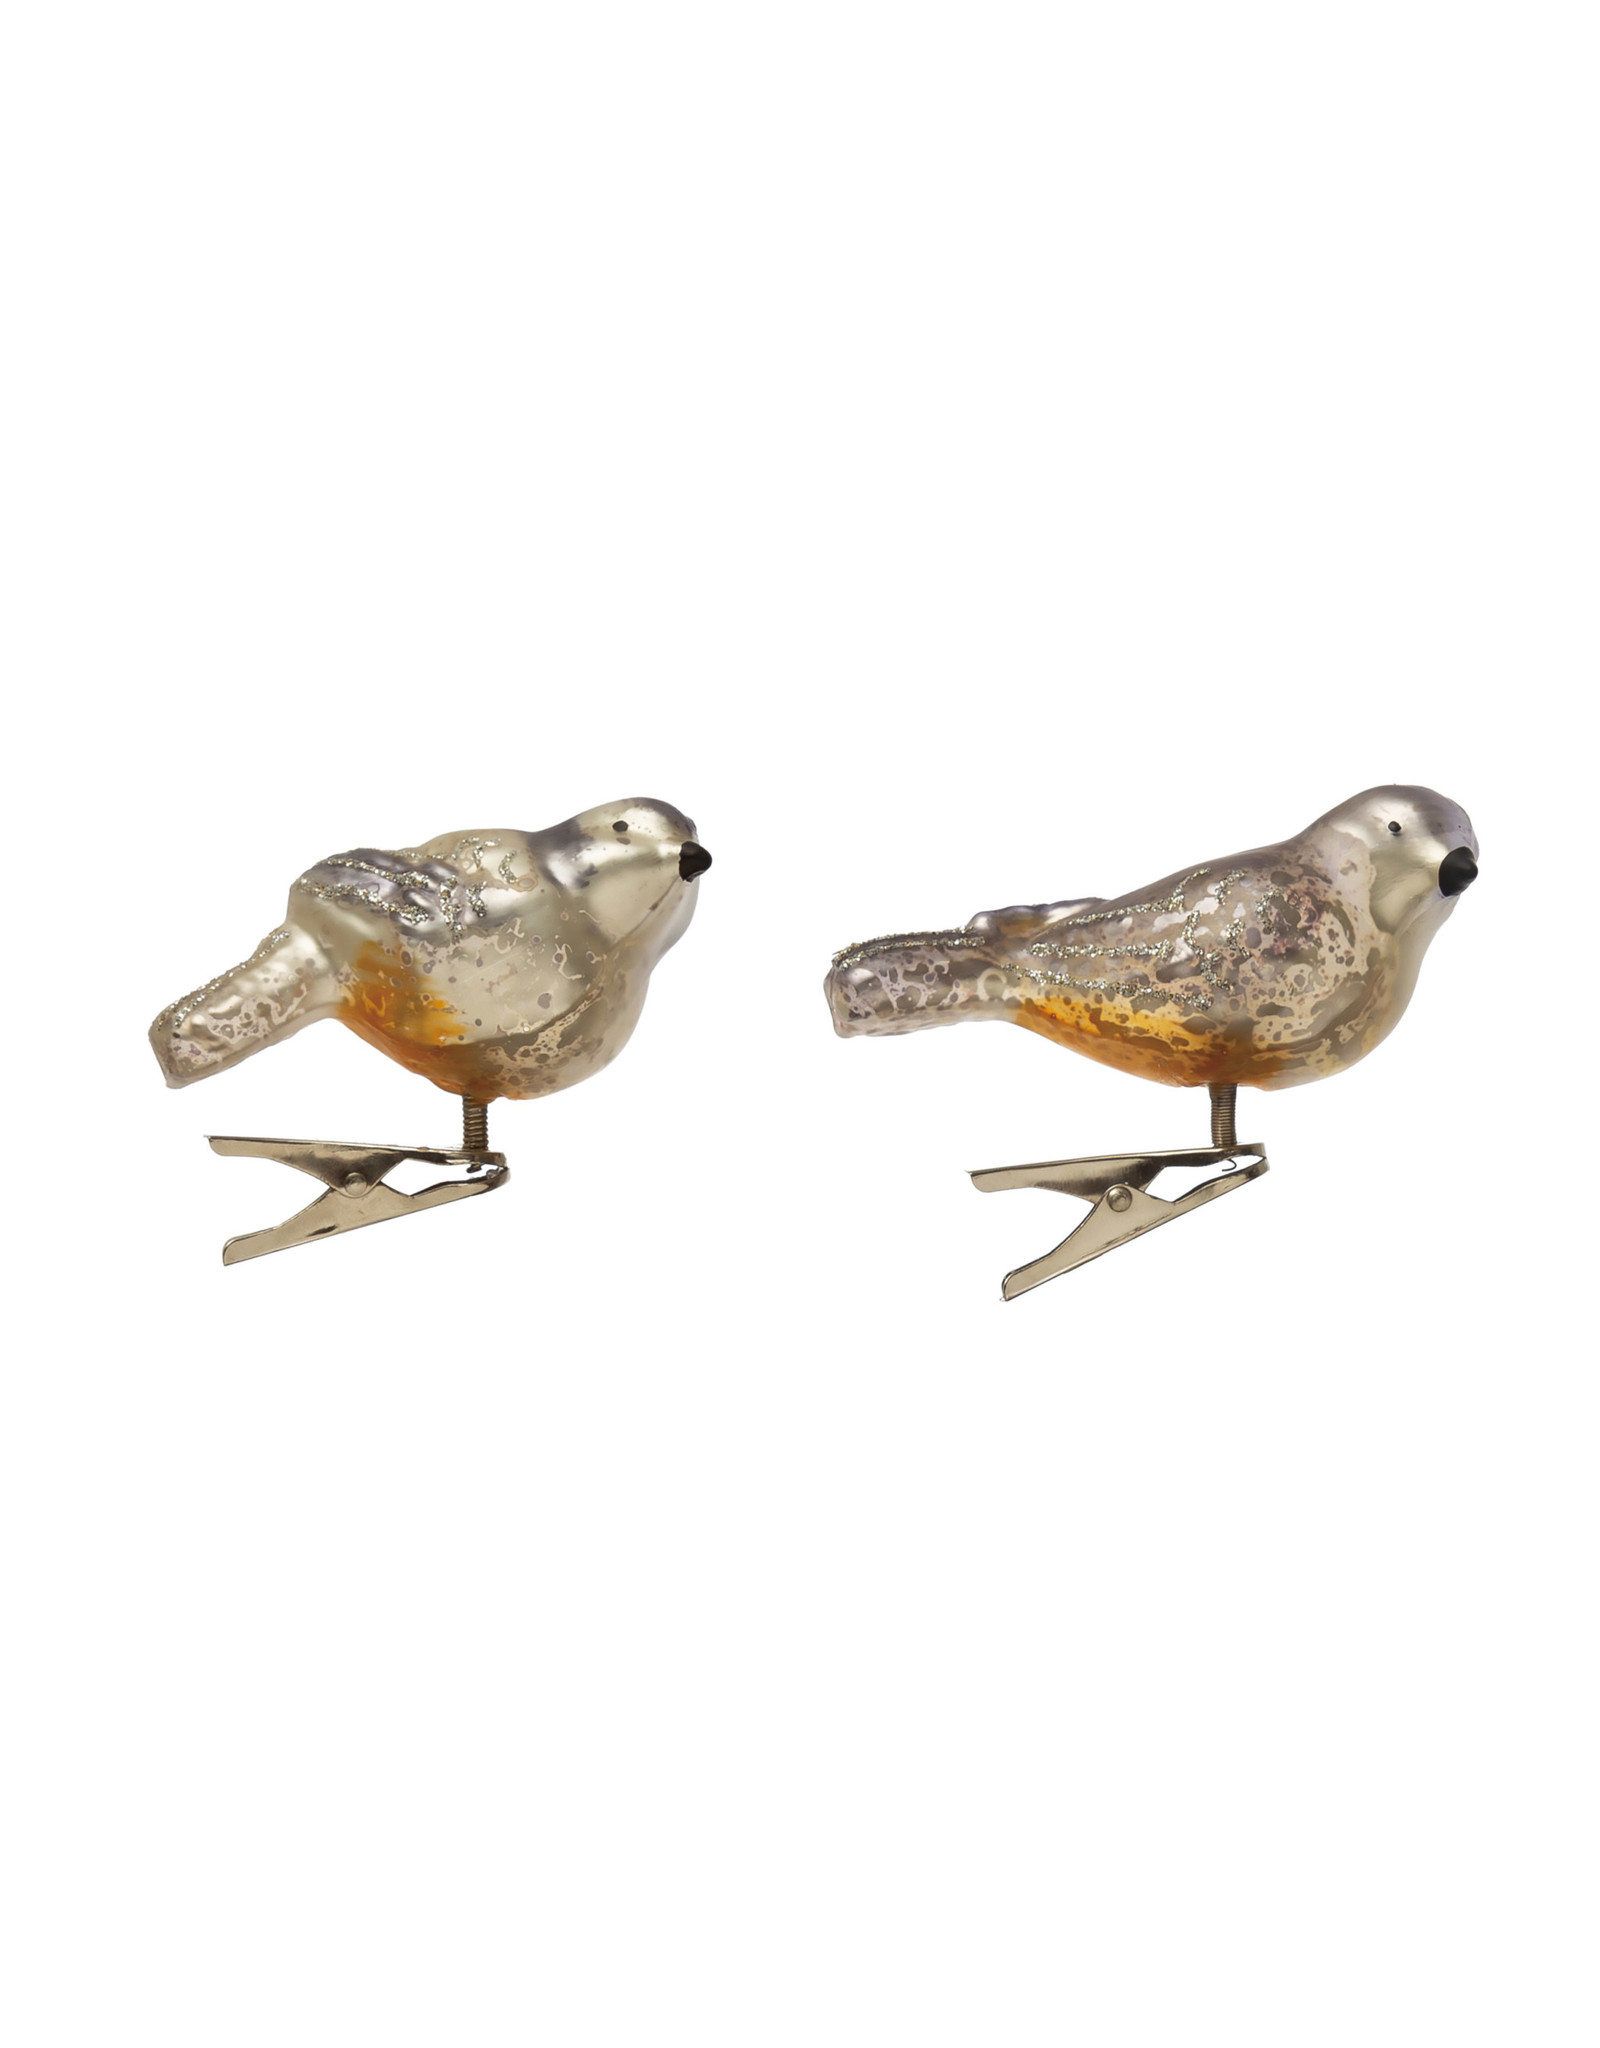 XS1325A 7"L x 2"H Mercury Glass Bird Clip-On Ornament with Glitter,  2 Styles EACH